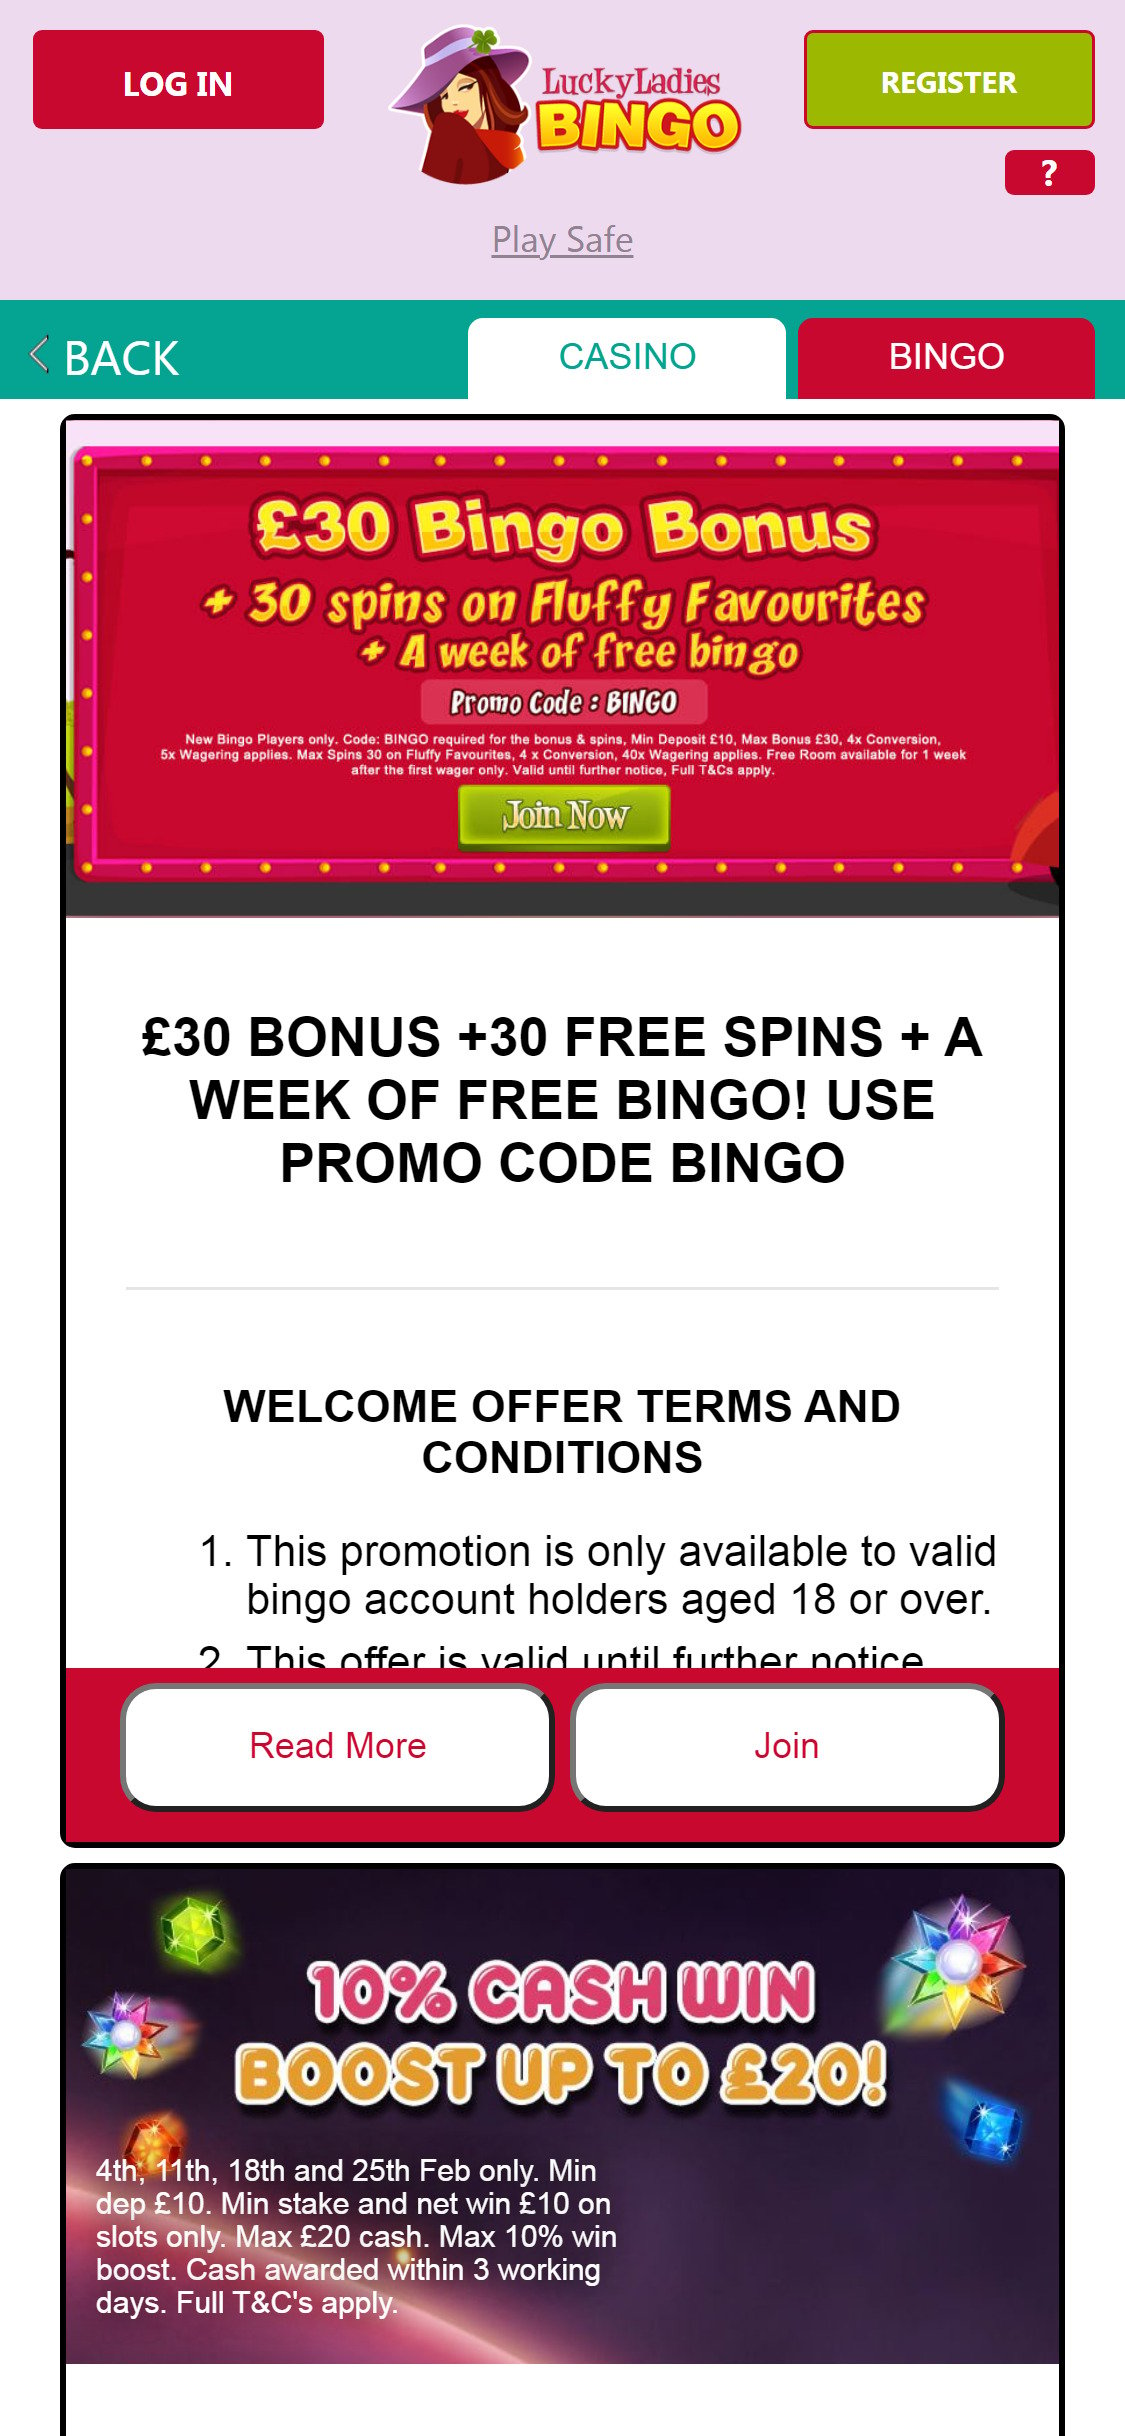 Lucky Ladies Bingo Casino Mobile No Deposit Bonus Review